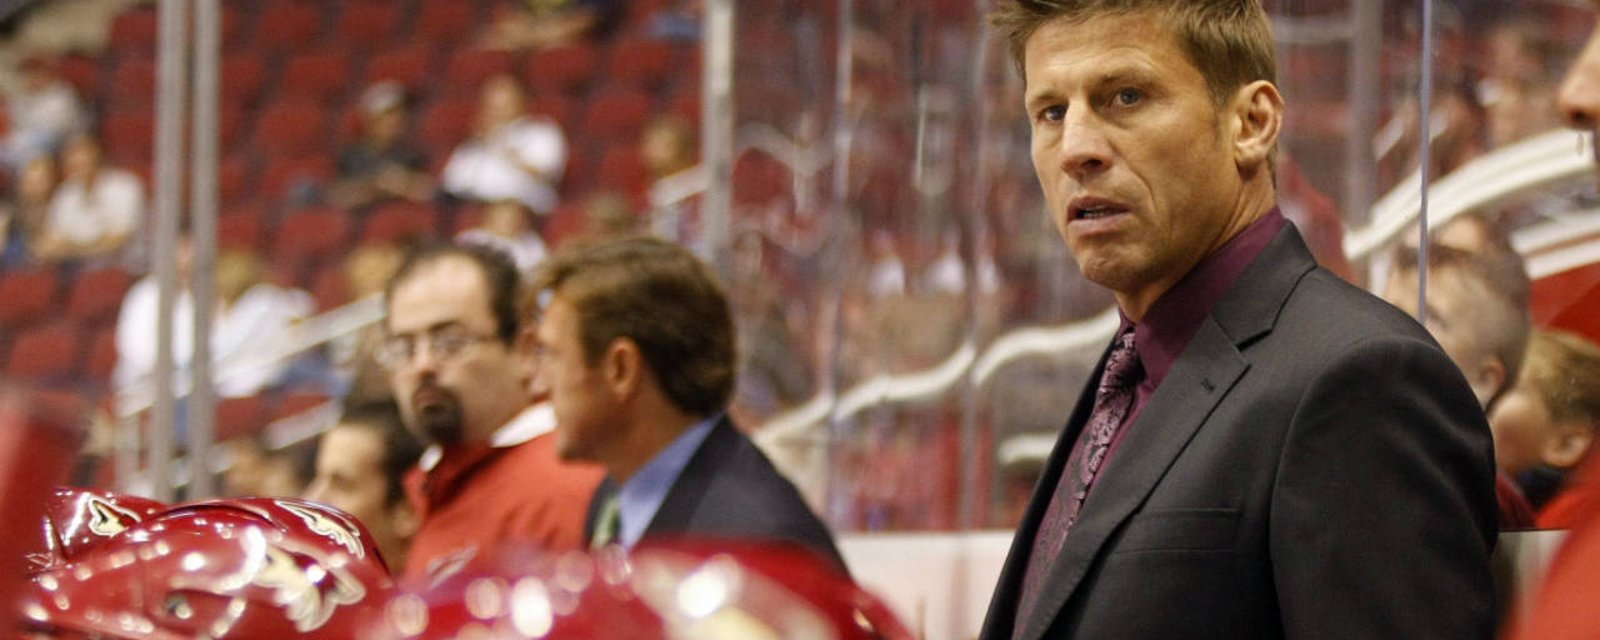 Ulf Samuelsson gets a job as an NHL coach.